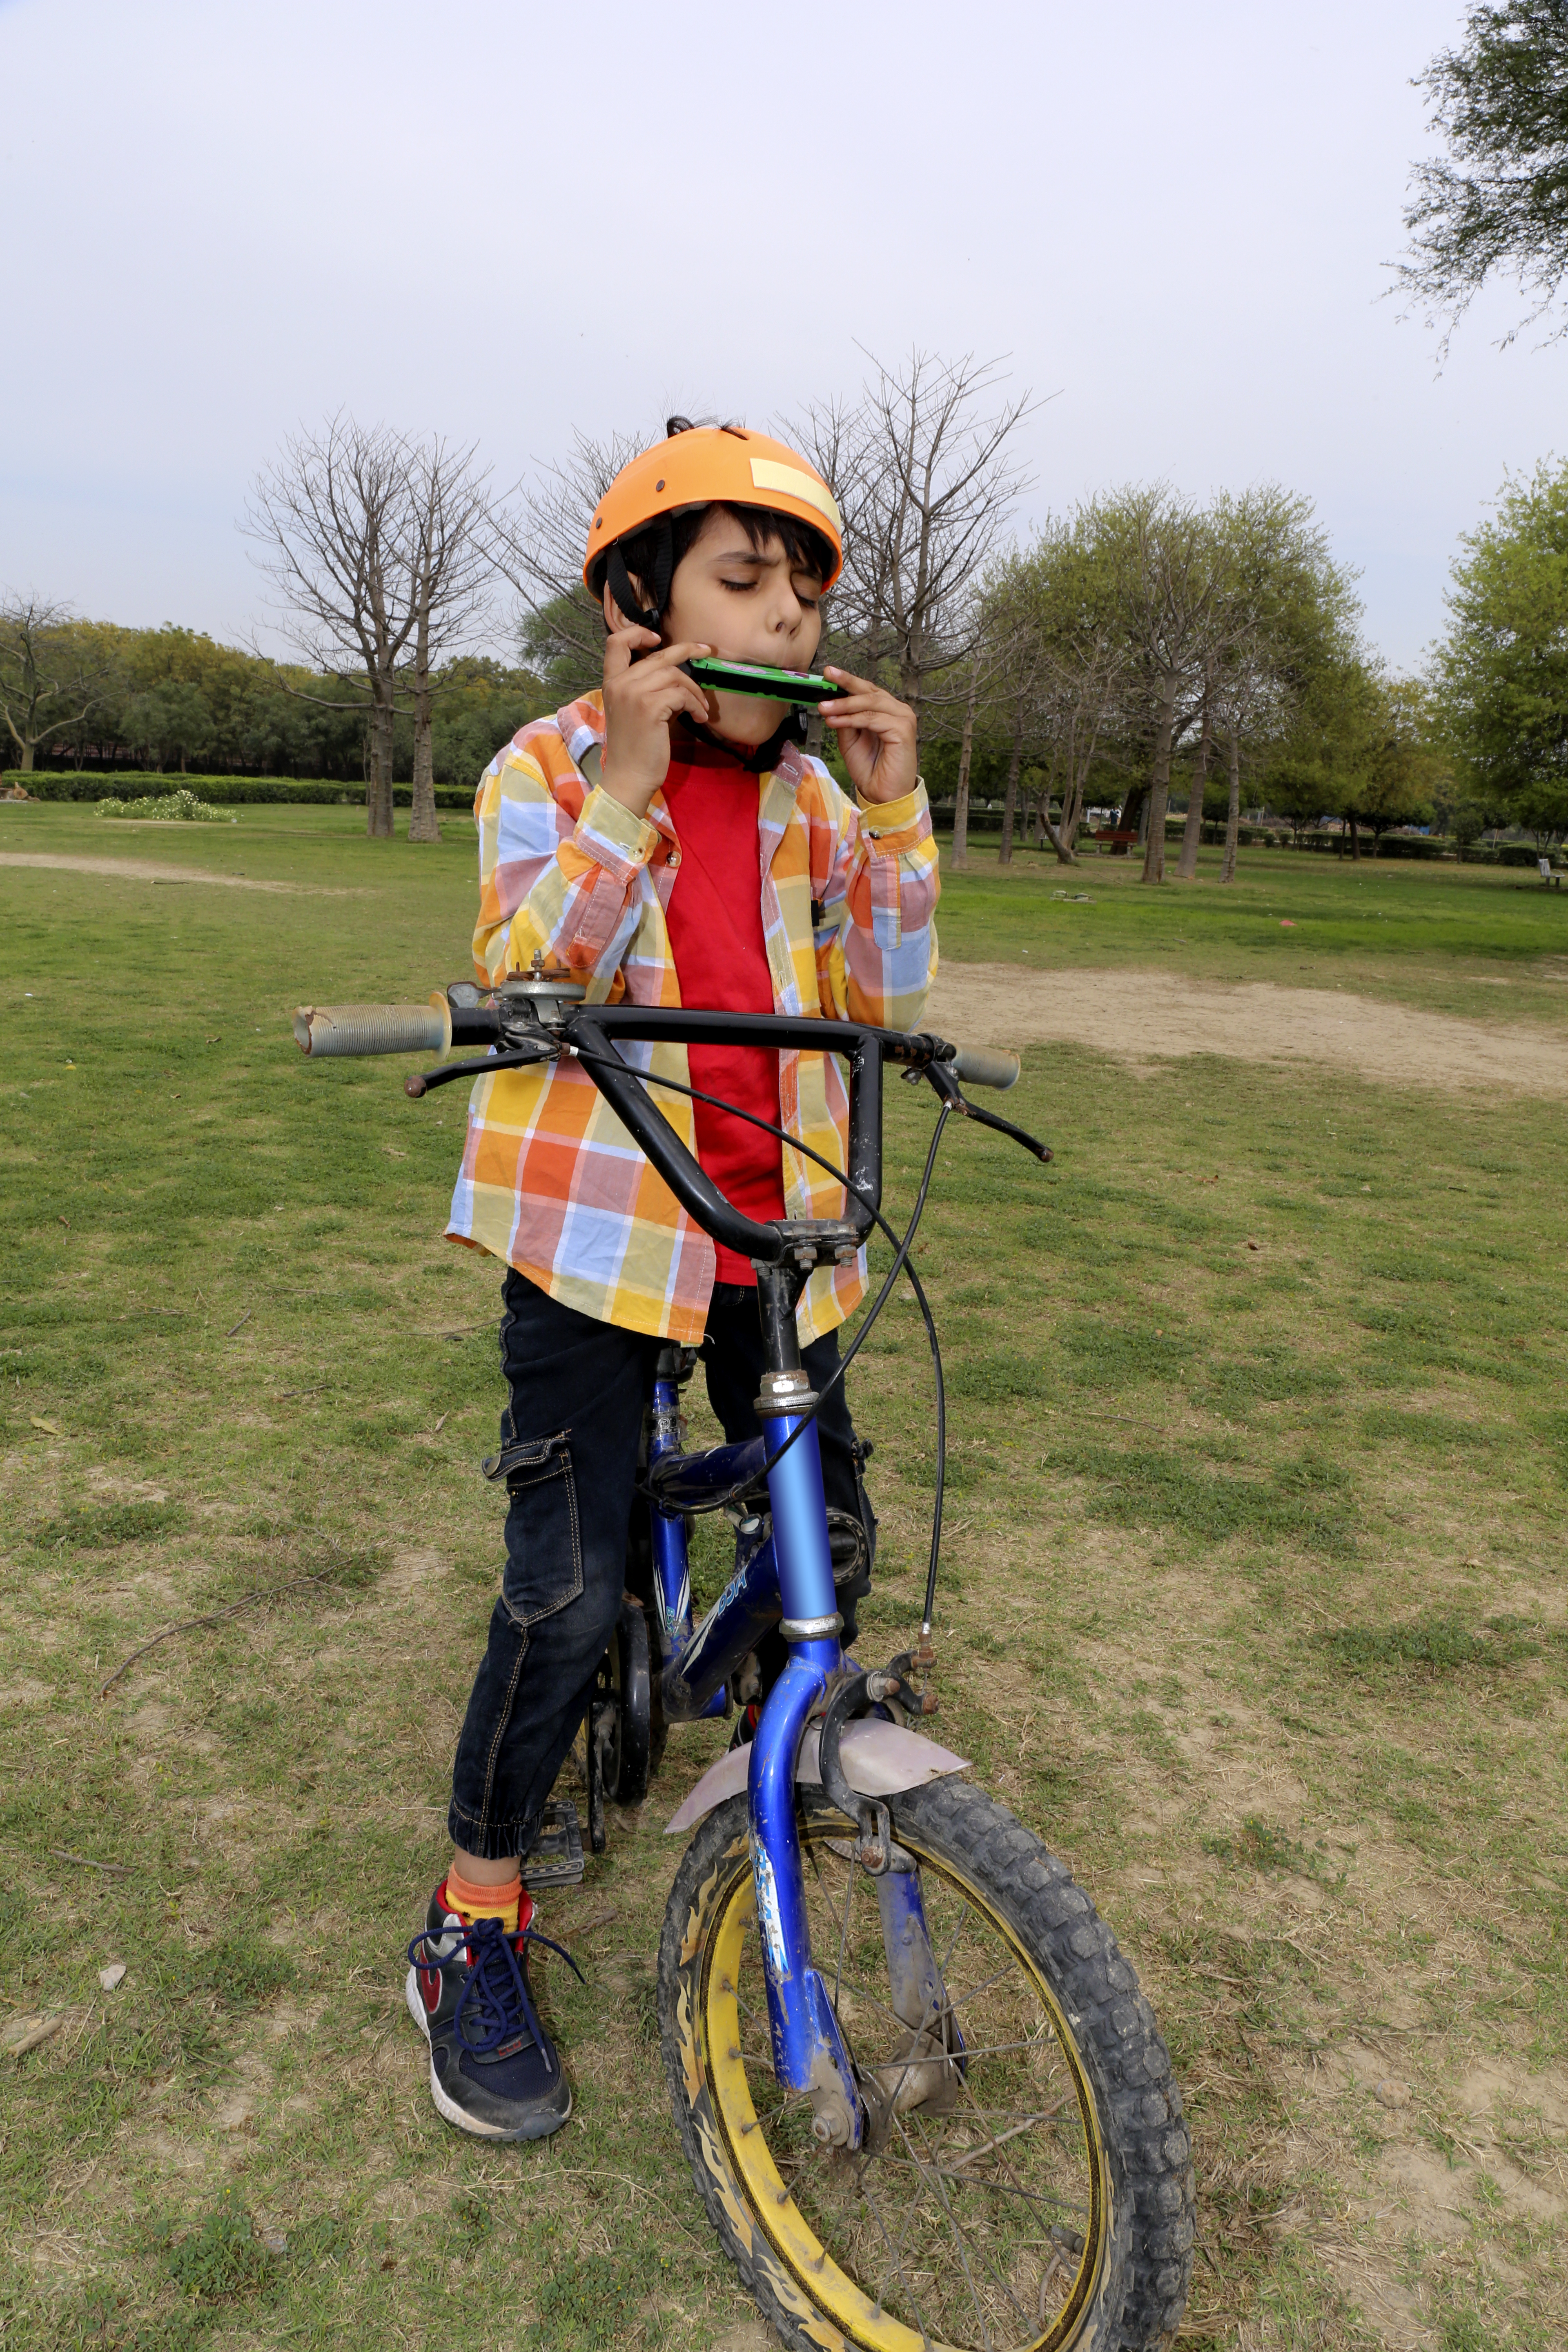 Boy on a bike playing the harmonica.